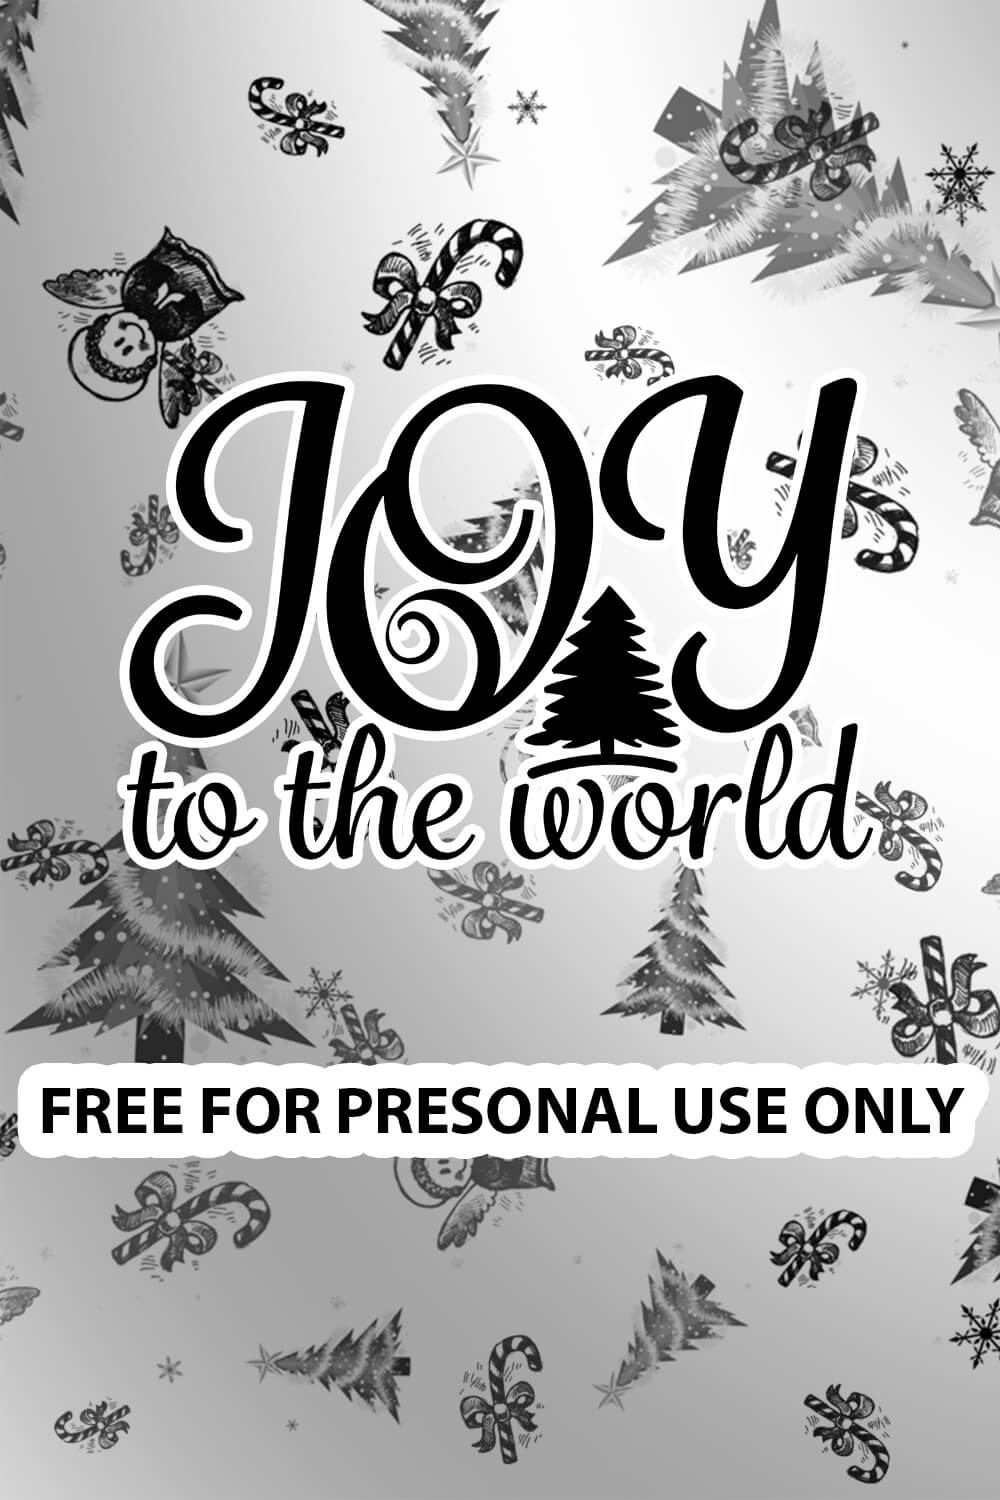 Joy to the world free SVG files pinterest image.